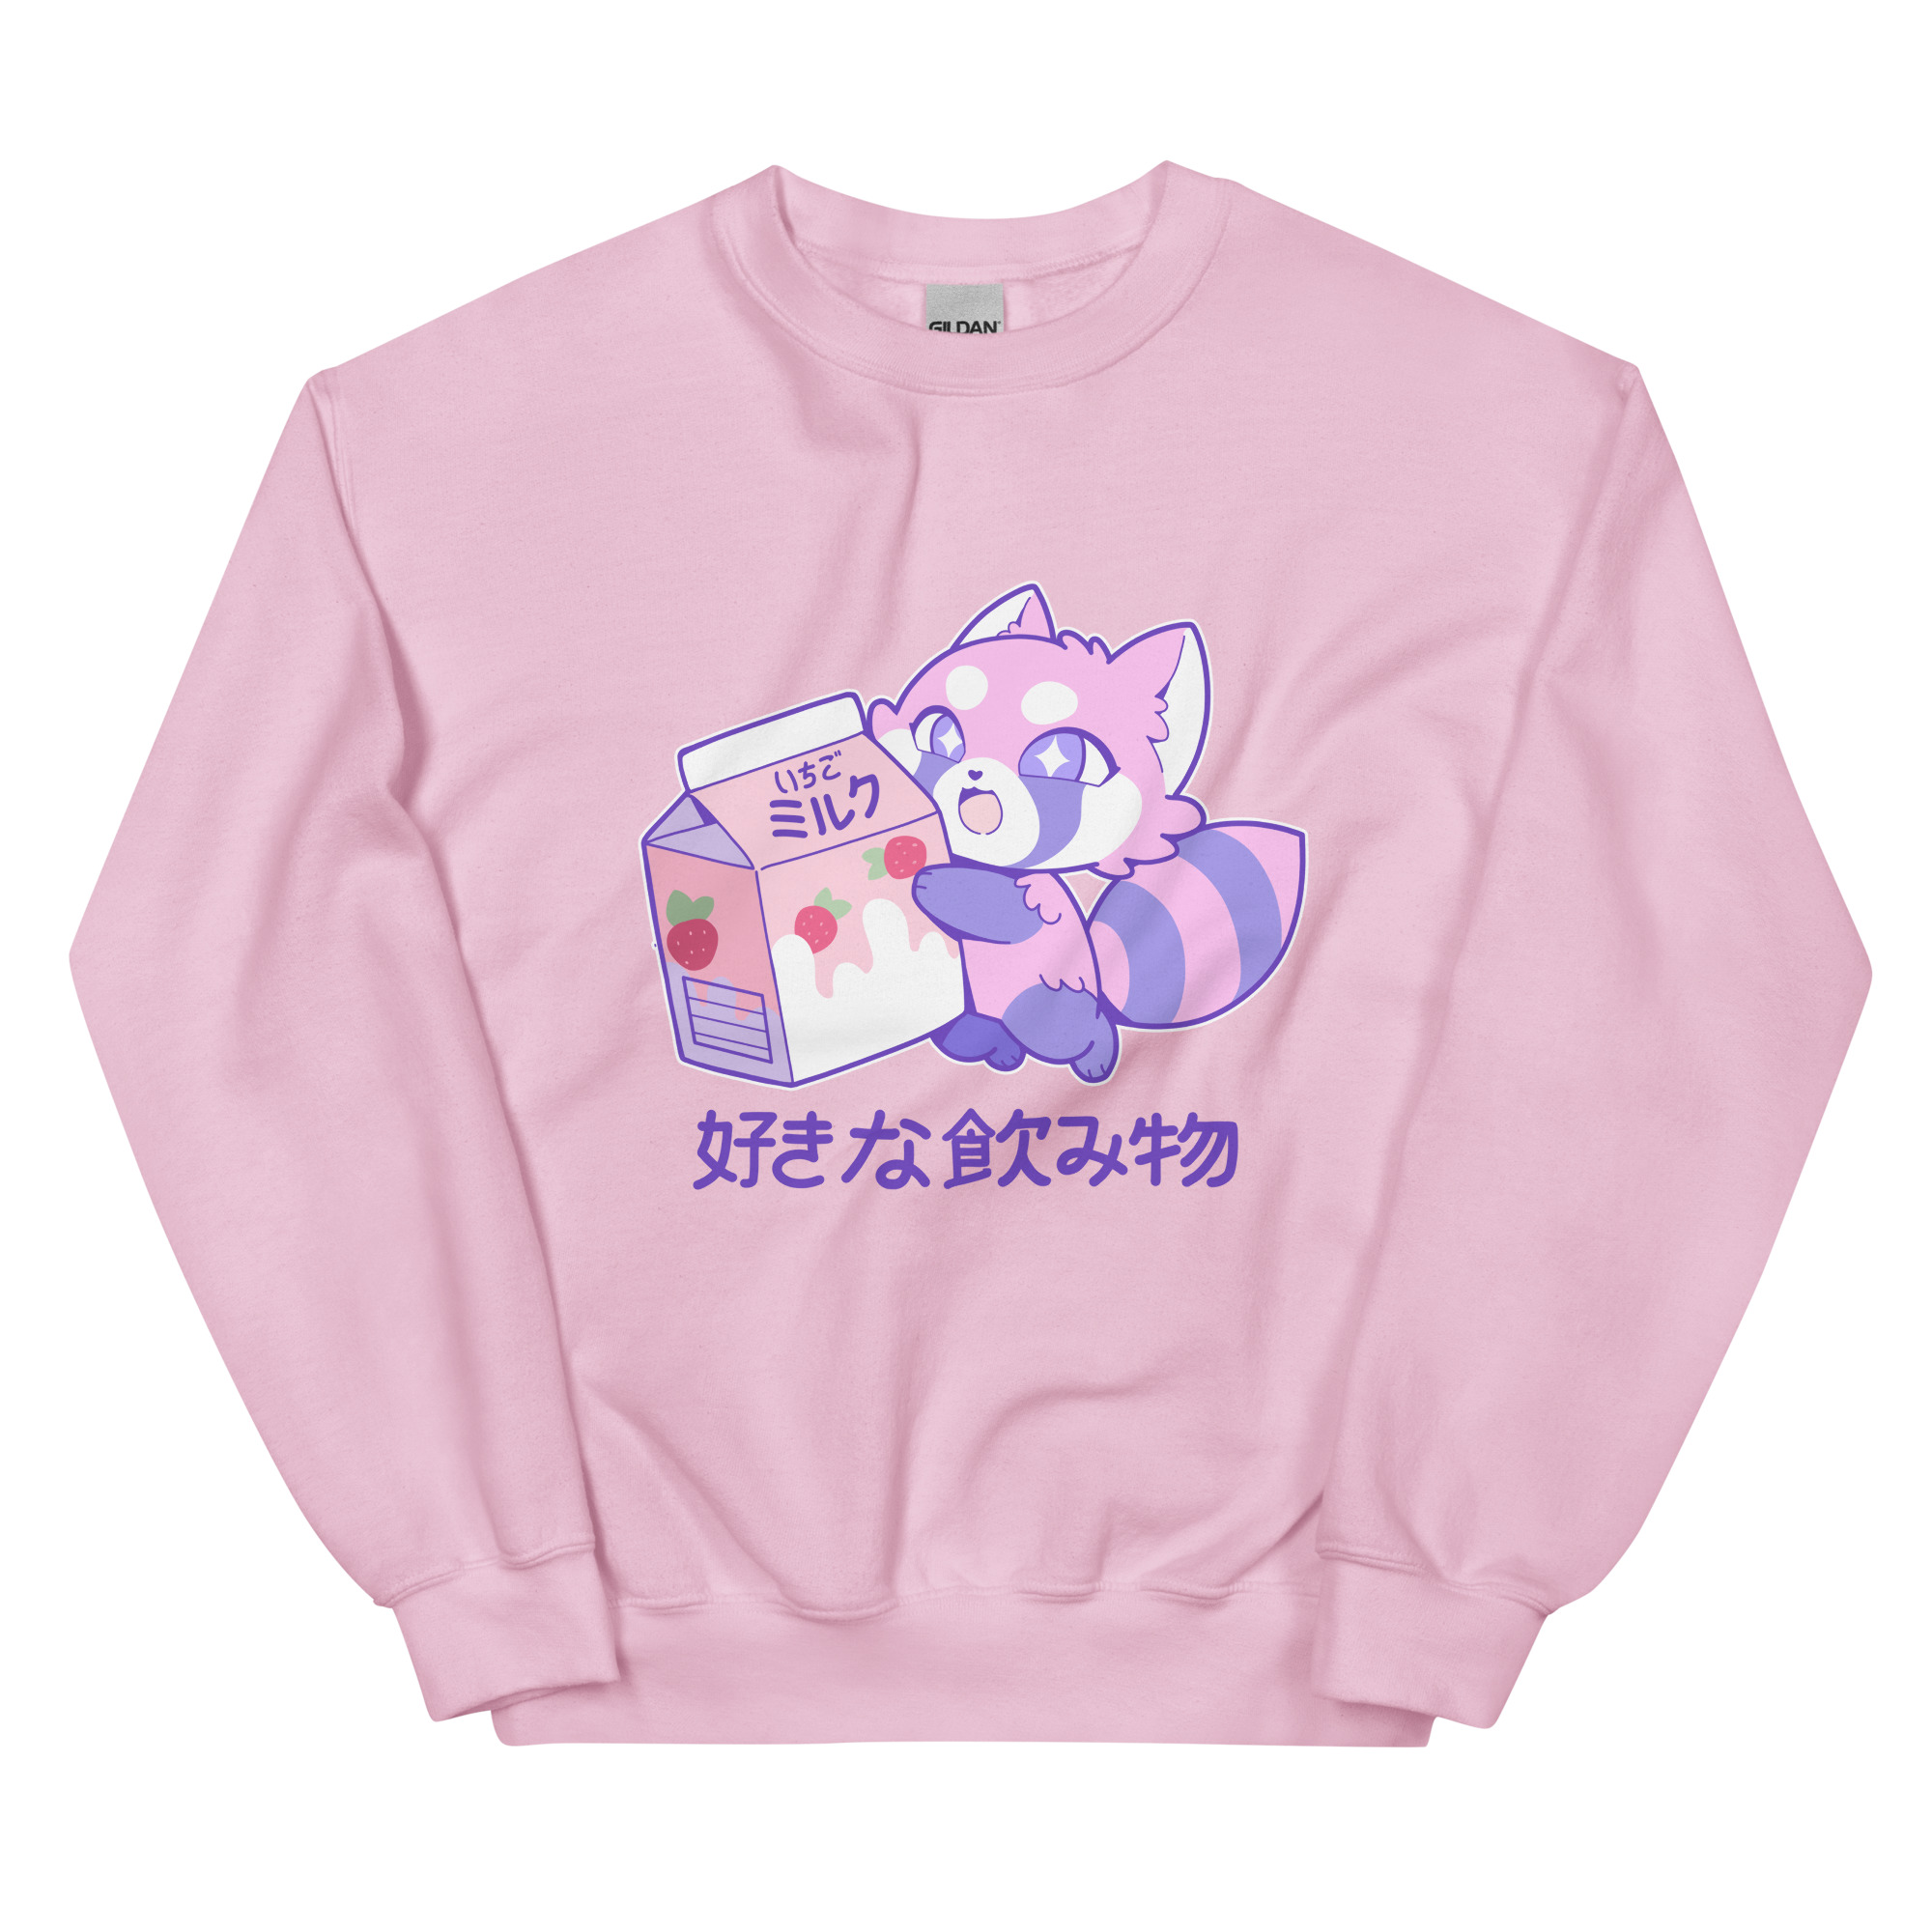 unisex-crew-neck-sweatshirt-light-pink-front-641b6c85c1299